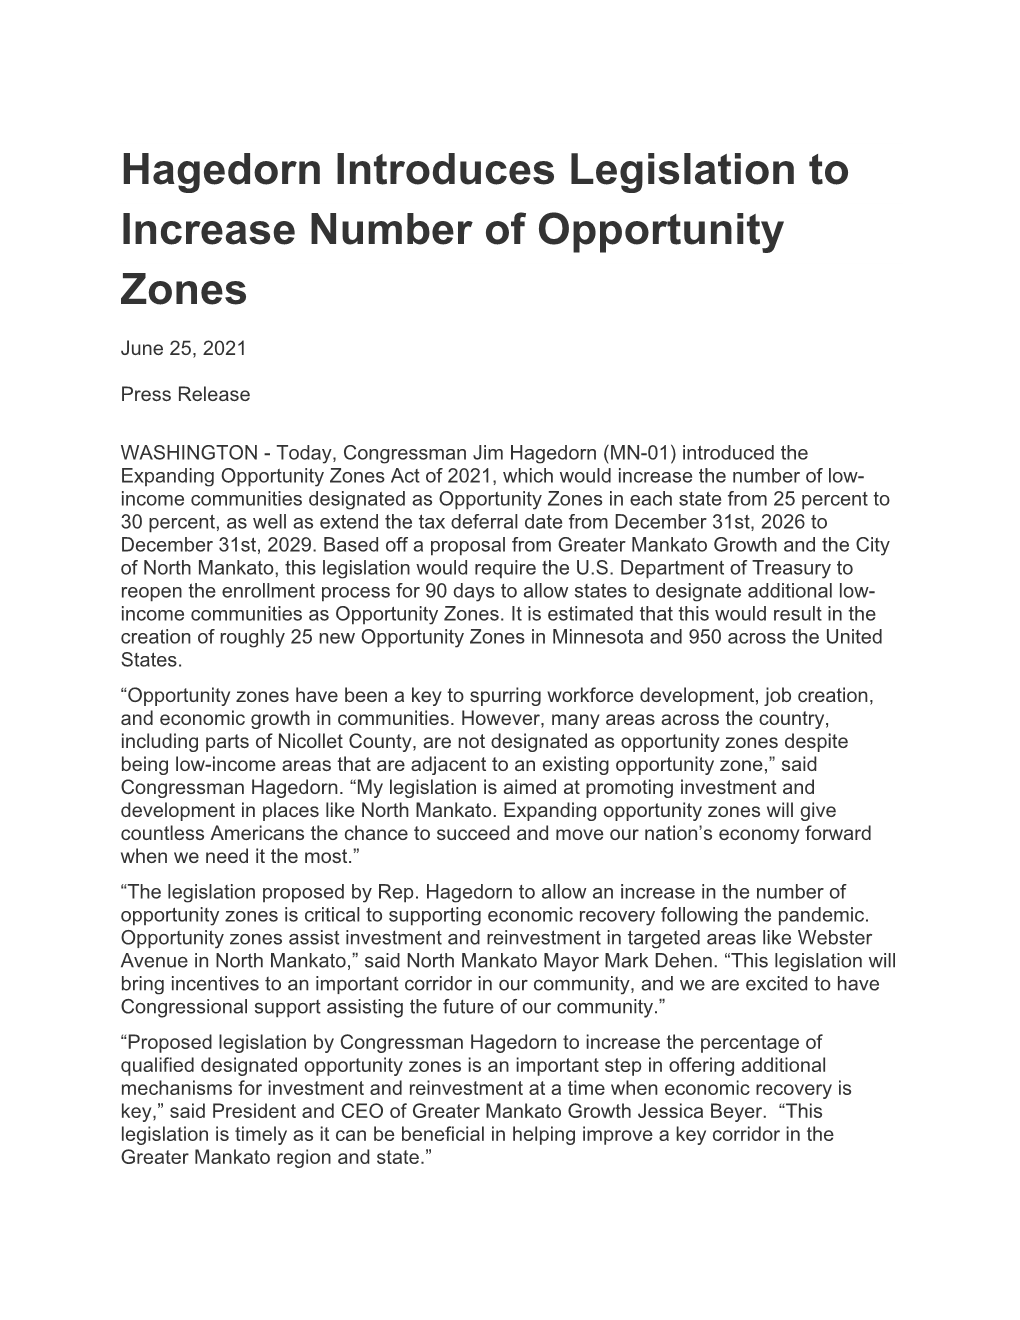 Press Release: Hagedorn Introduces Legislation to Increase Number Of